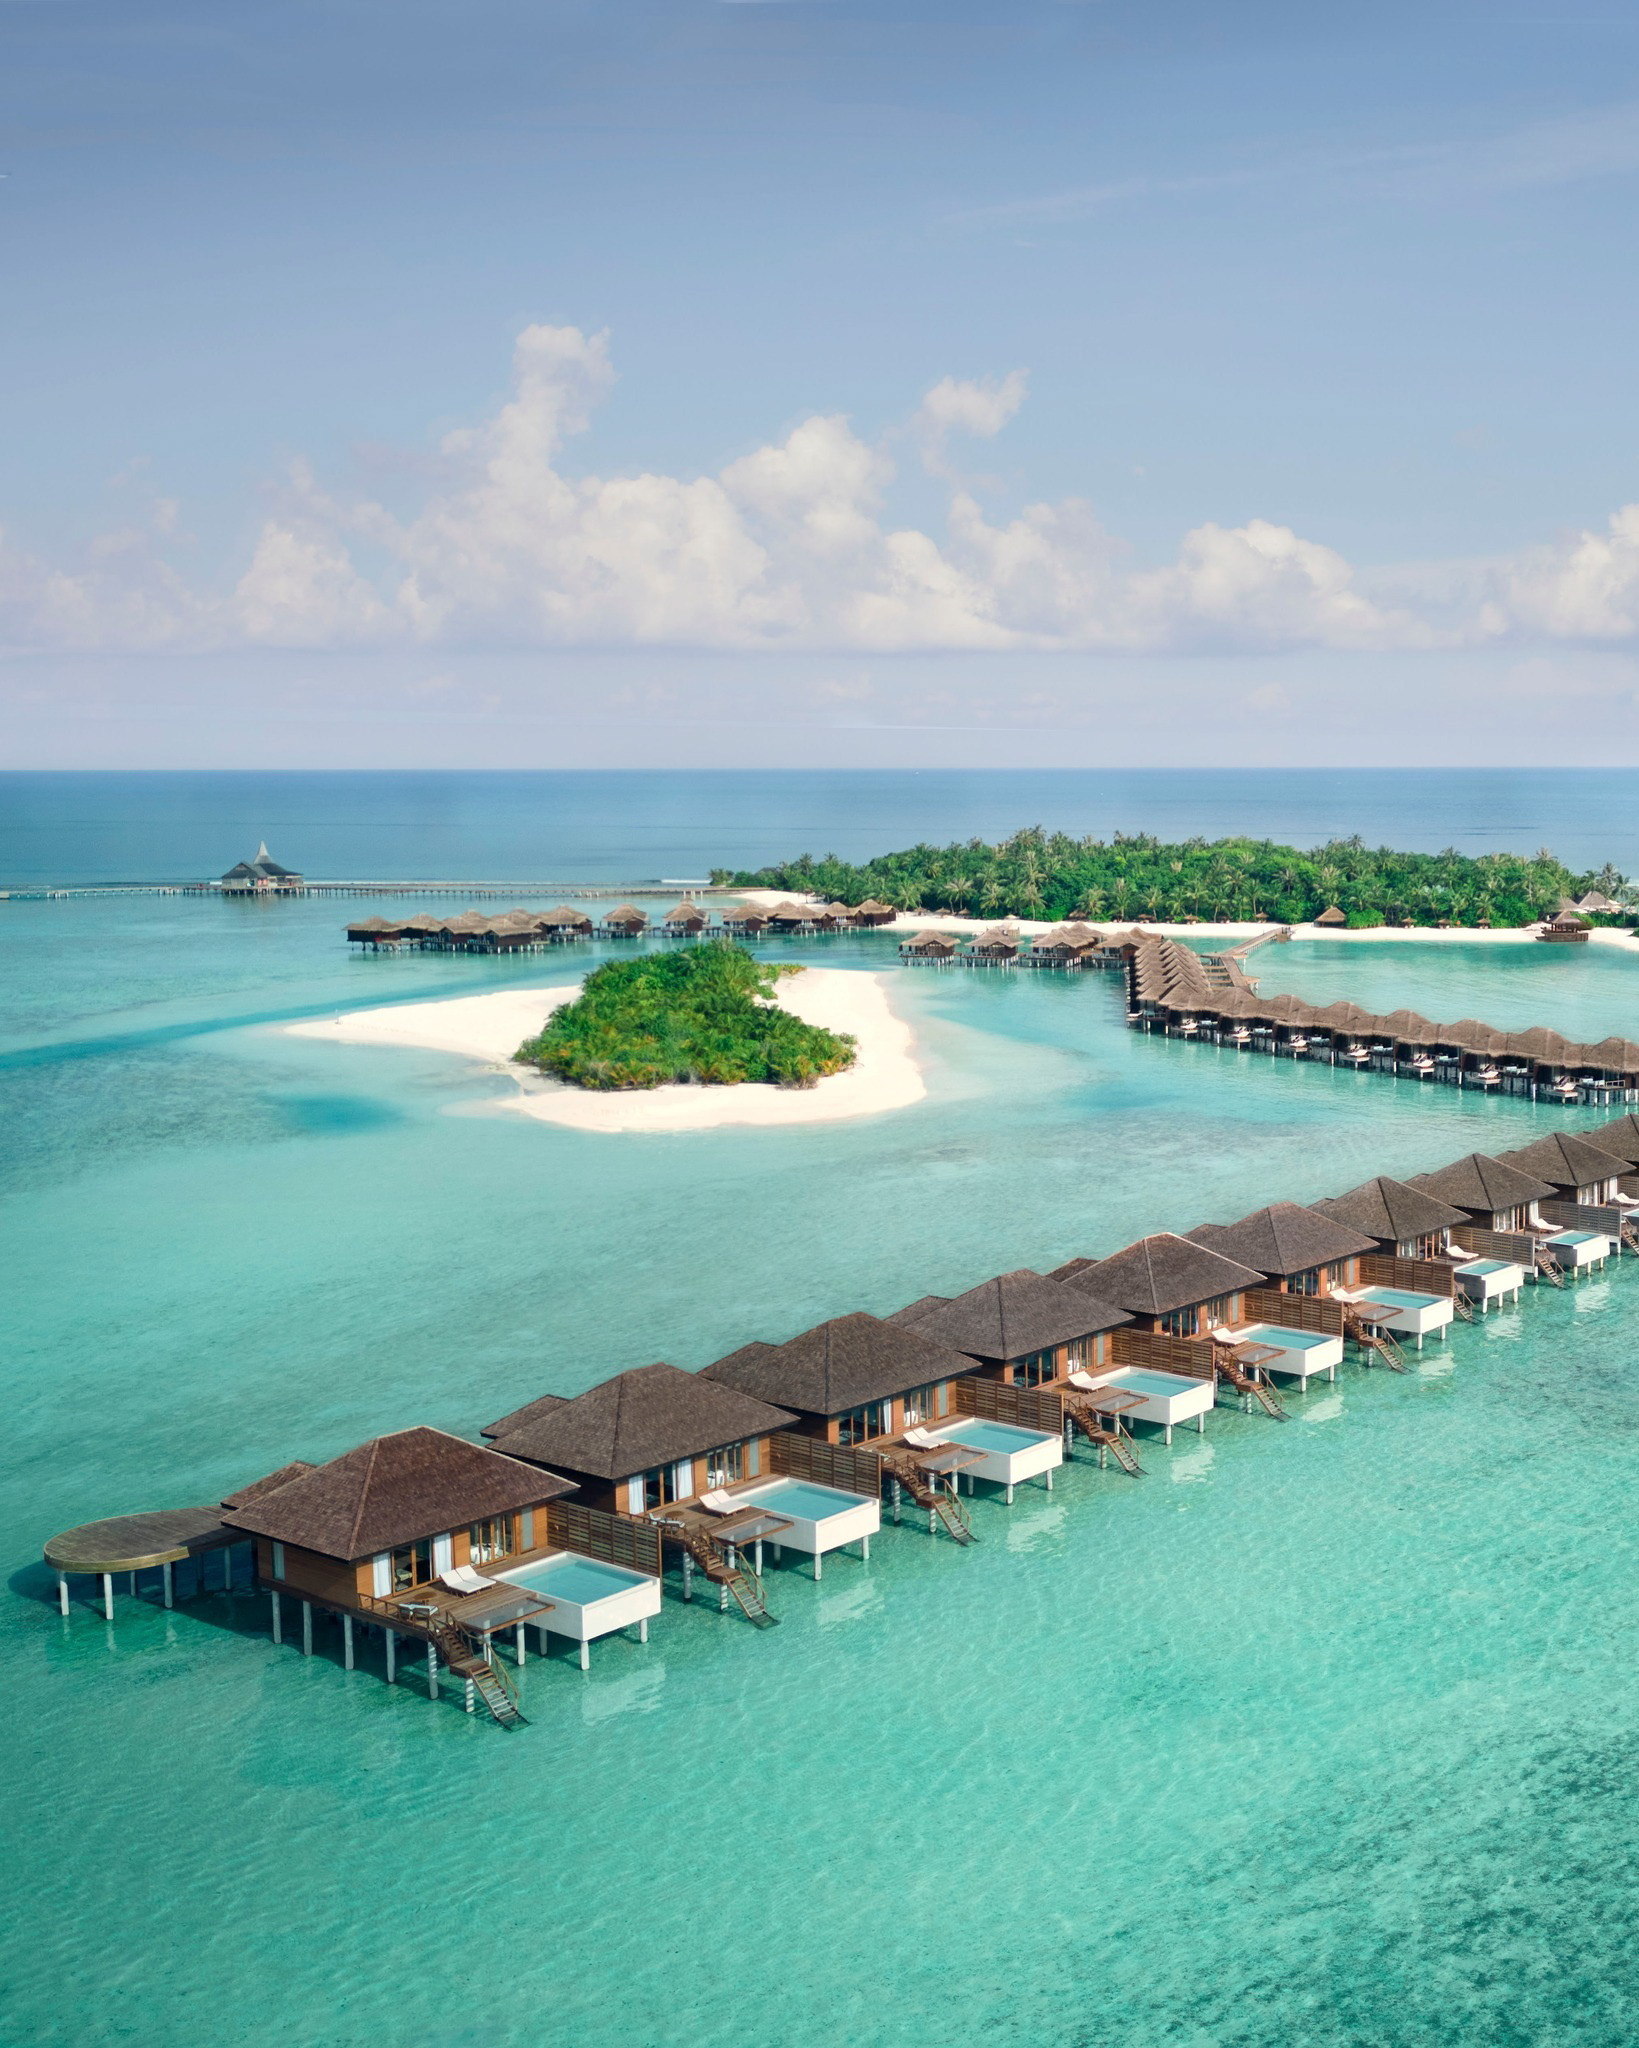 Anantara Veli Maldives Resort - South Male Atoll, Maldives - Overwater Pool Villas Aerial View